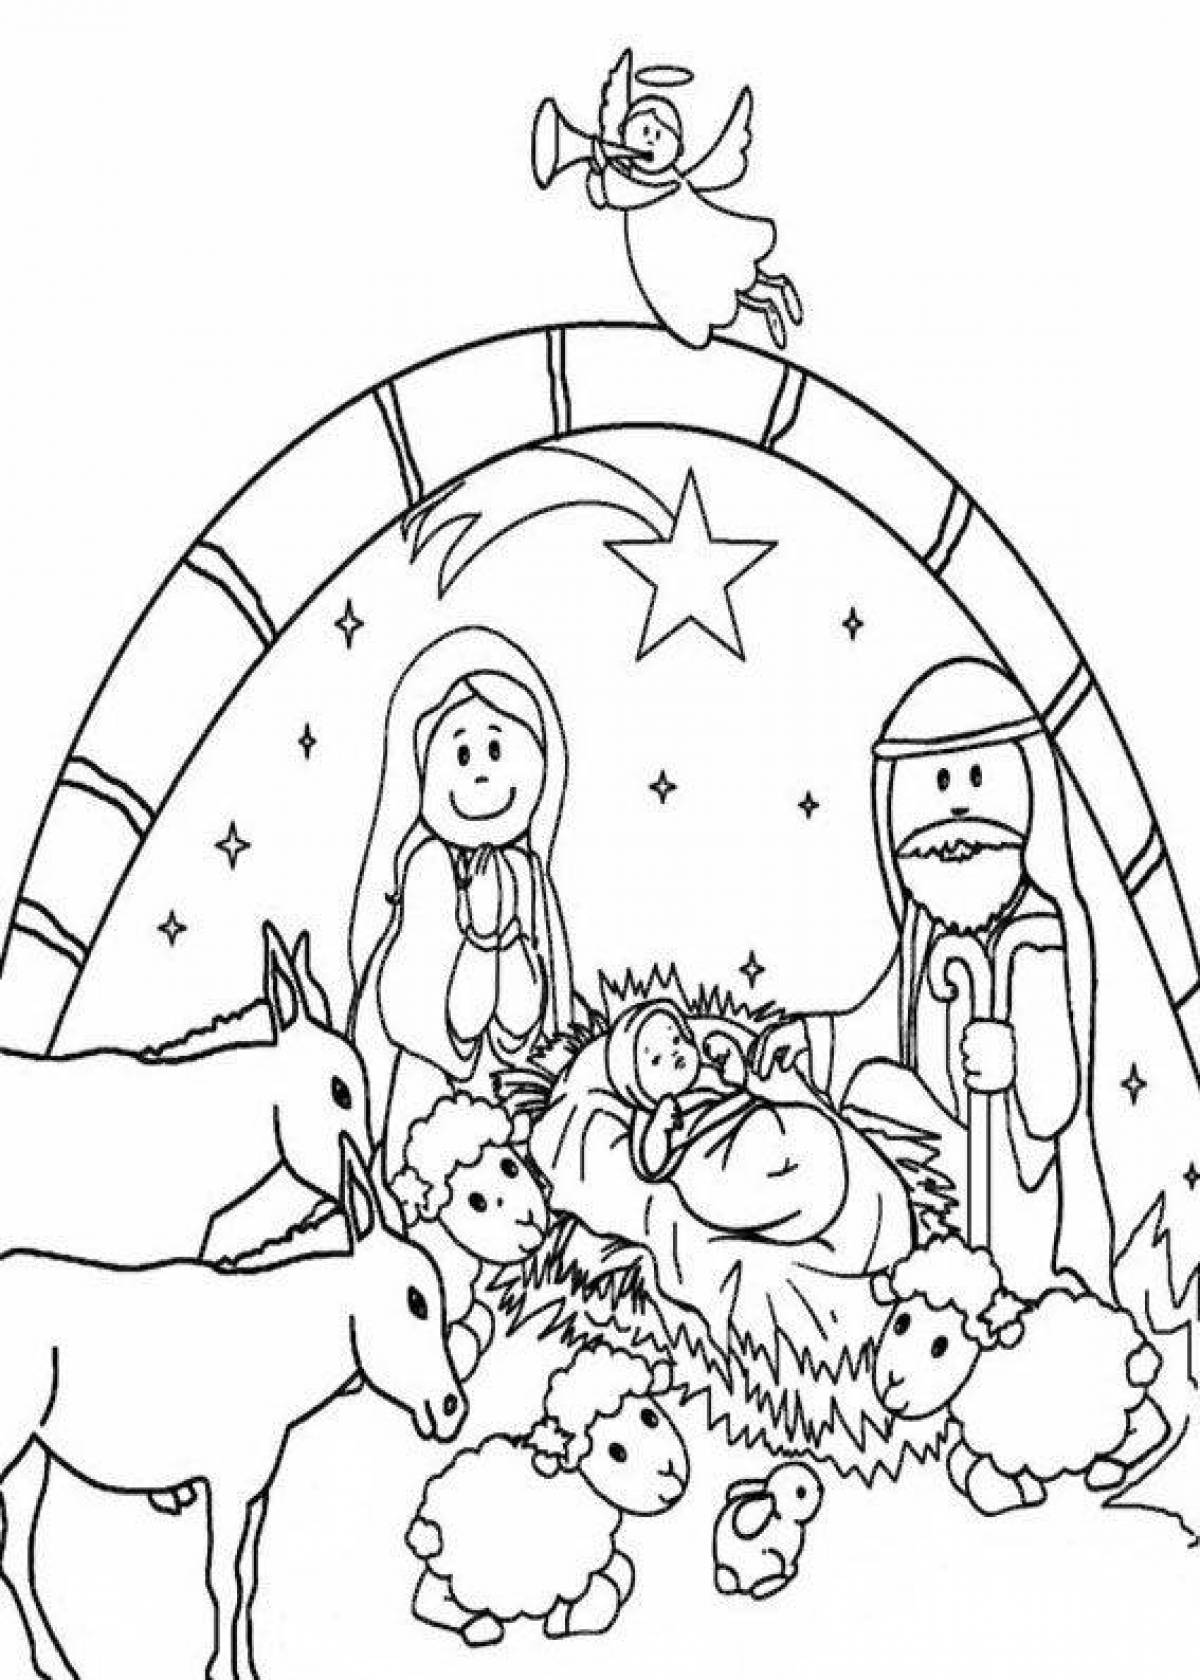 Generous nativity scene coloring